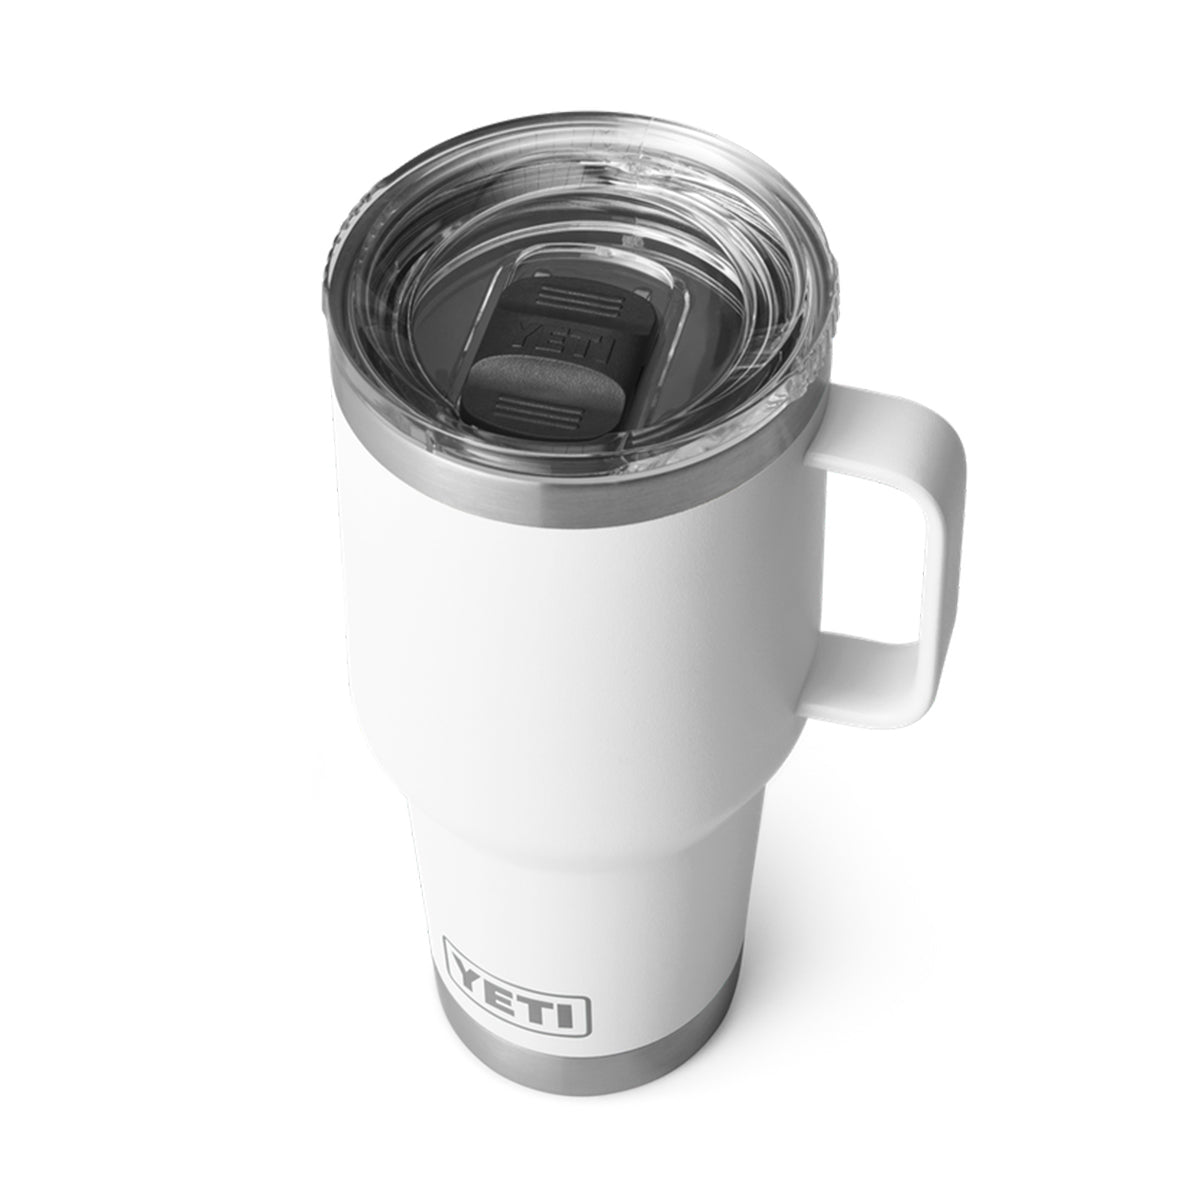 Yeti - Rambler 30 oz Travel Mug - Charcoal